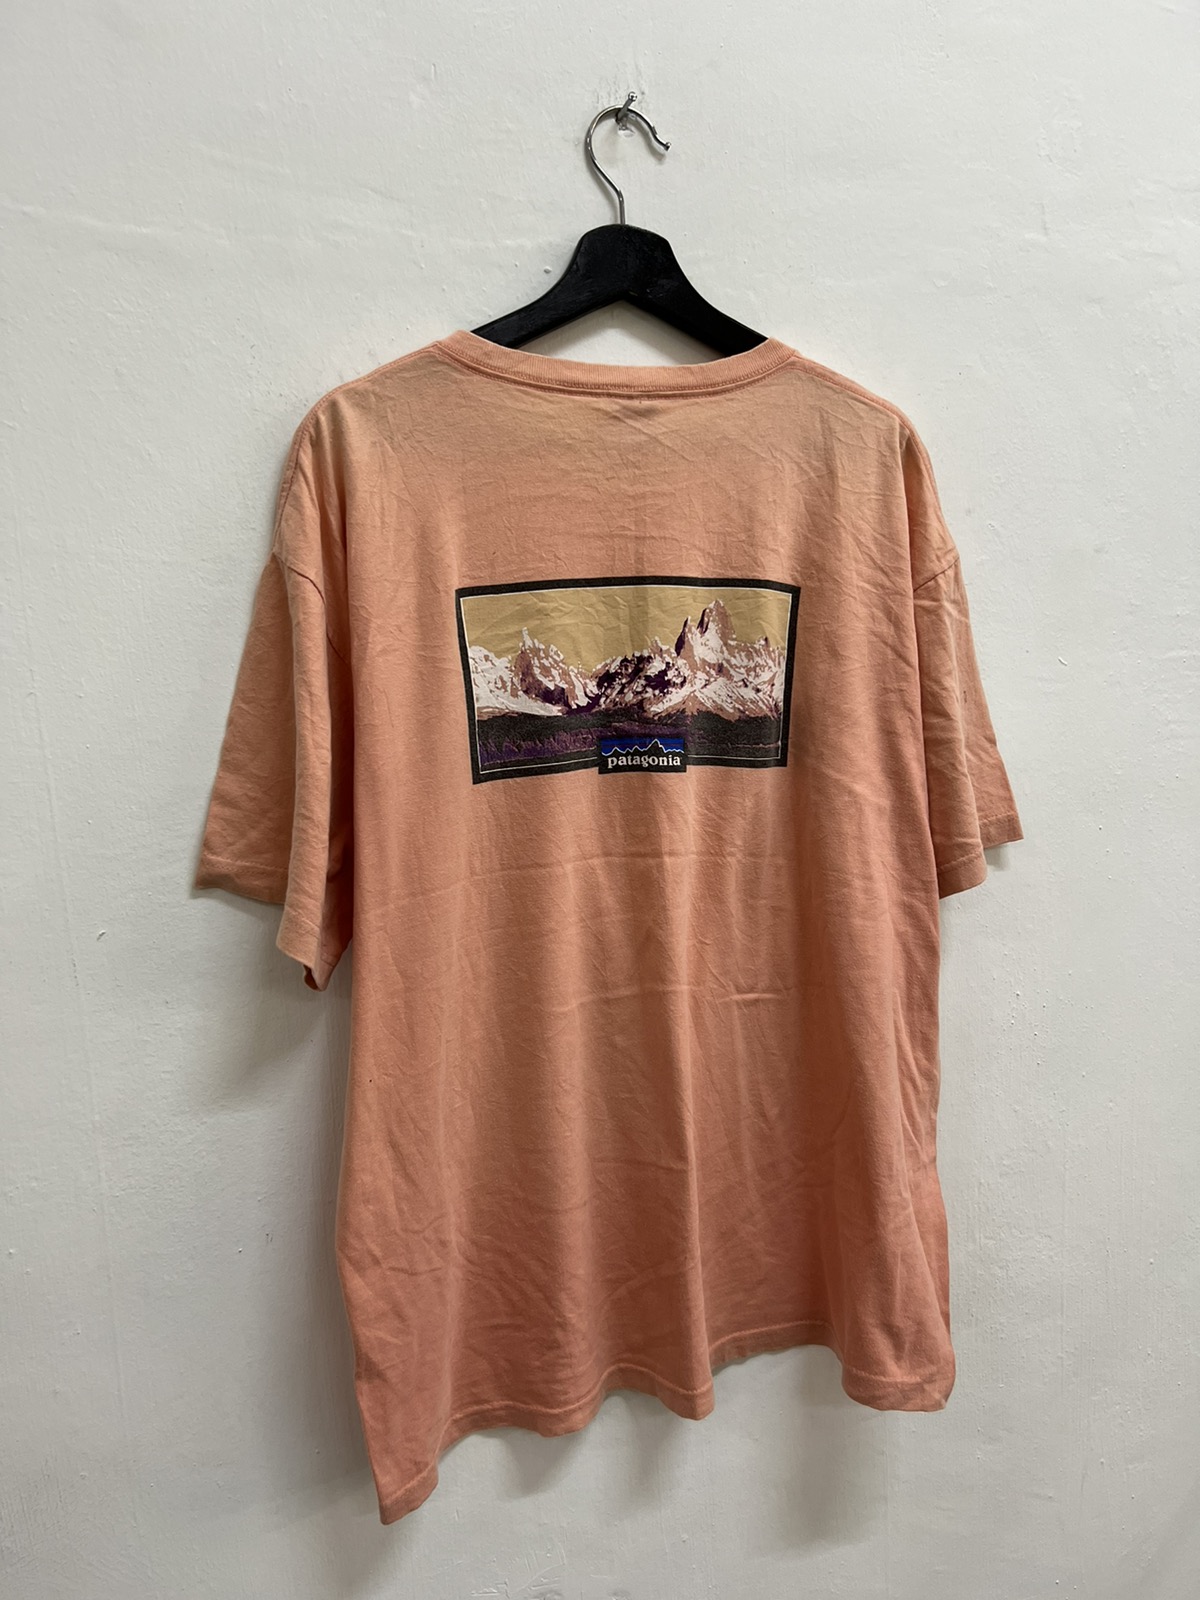 🔥STEAL🔥 Patagonia Tee Shirt - 6